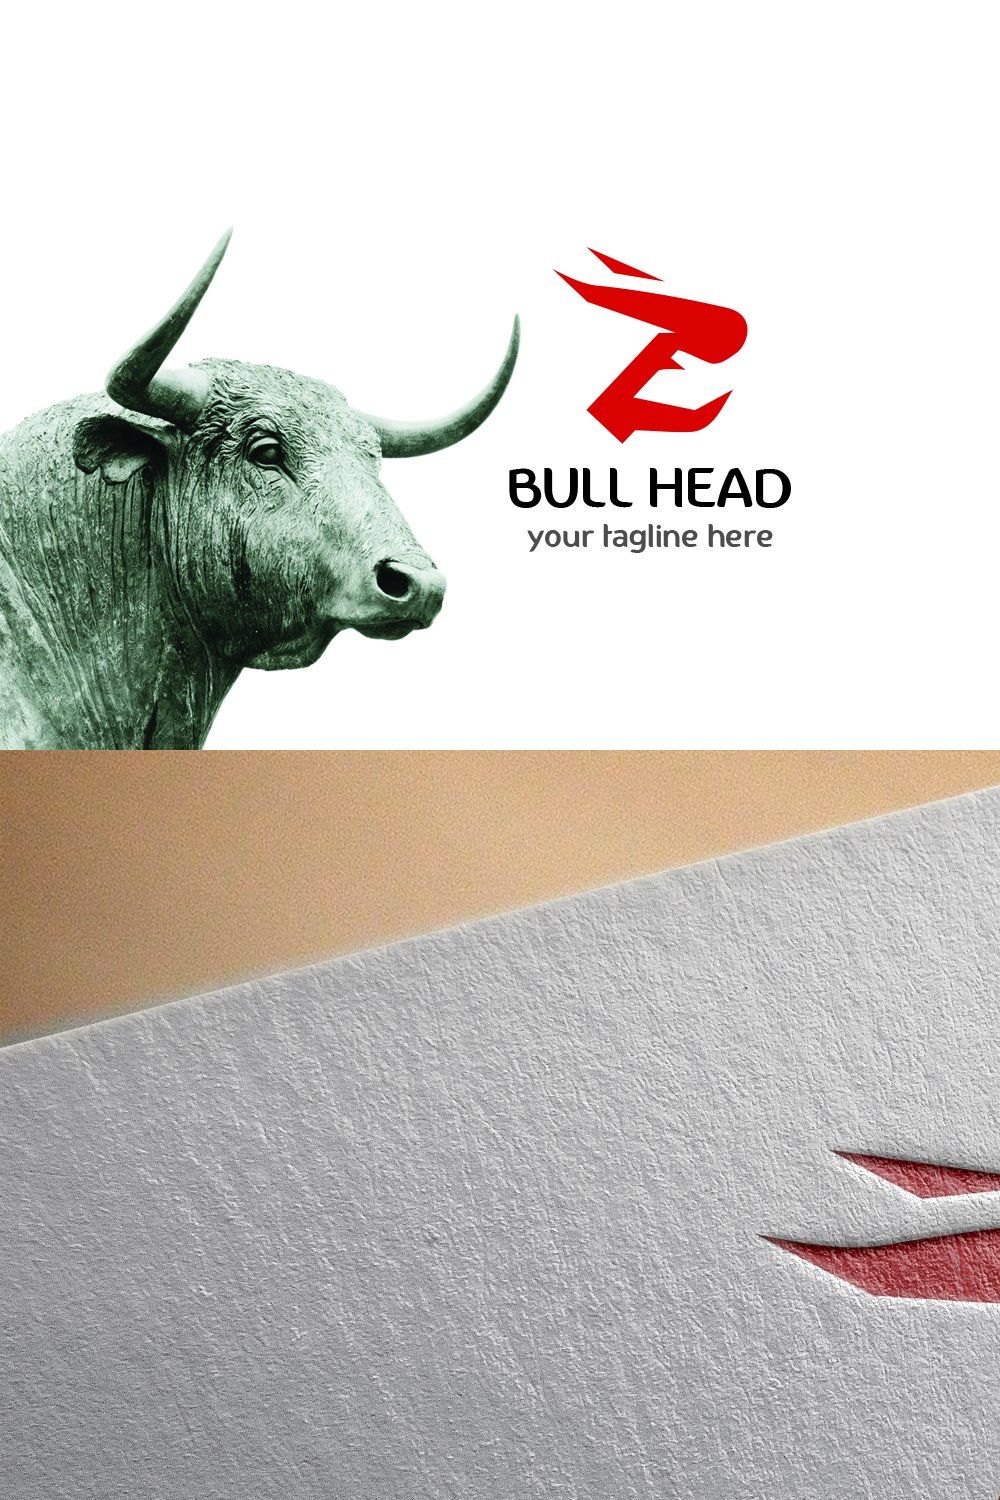 Bulls Head Logo pinterest preview image.